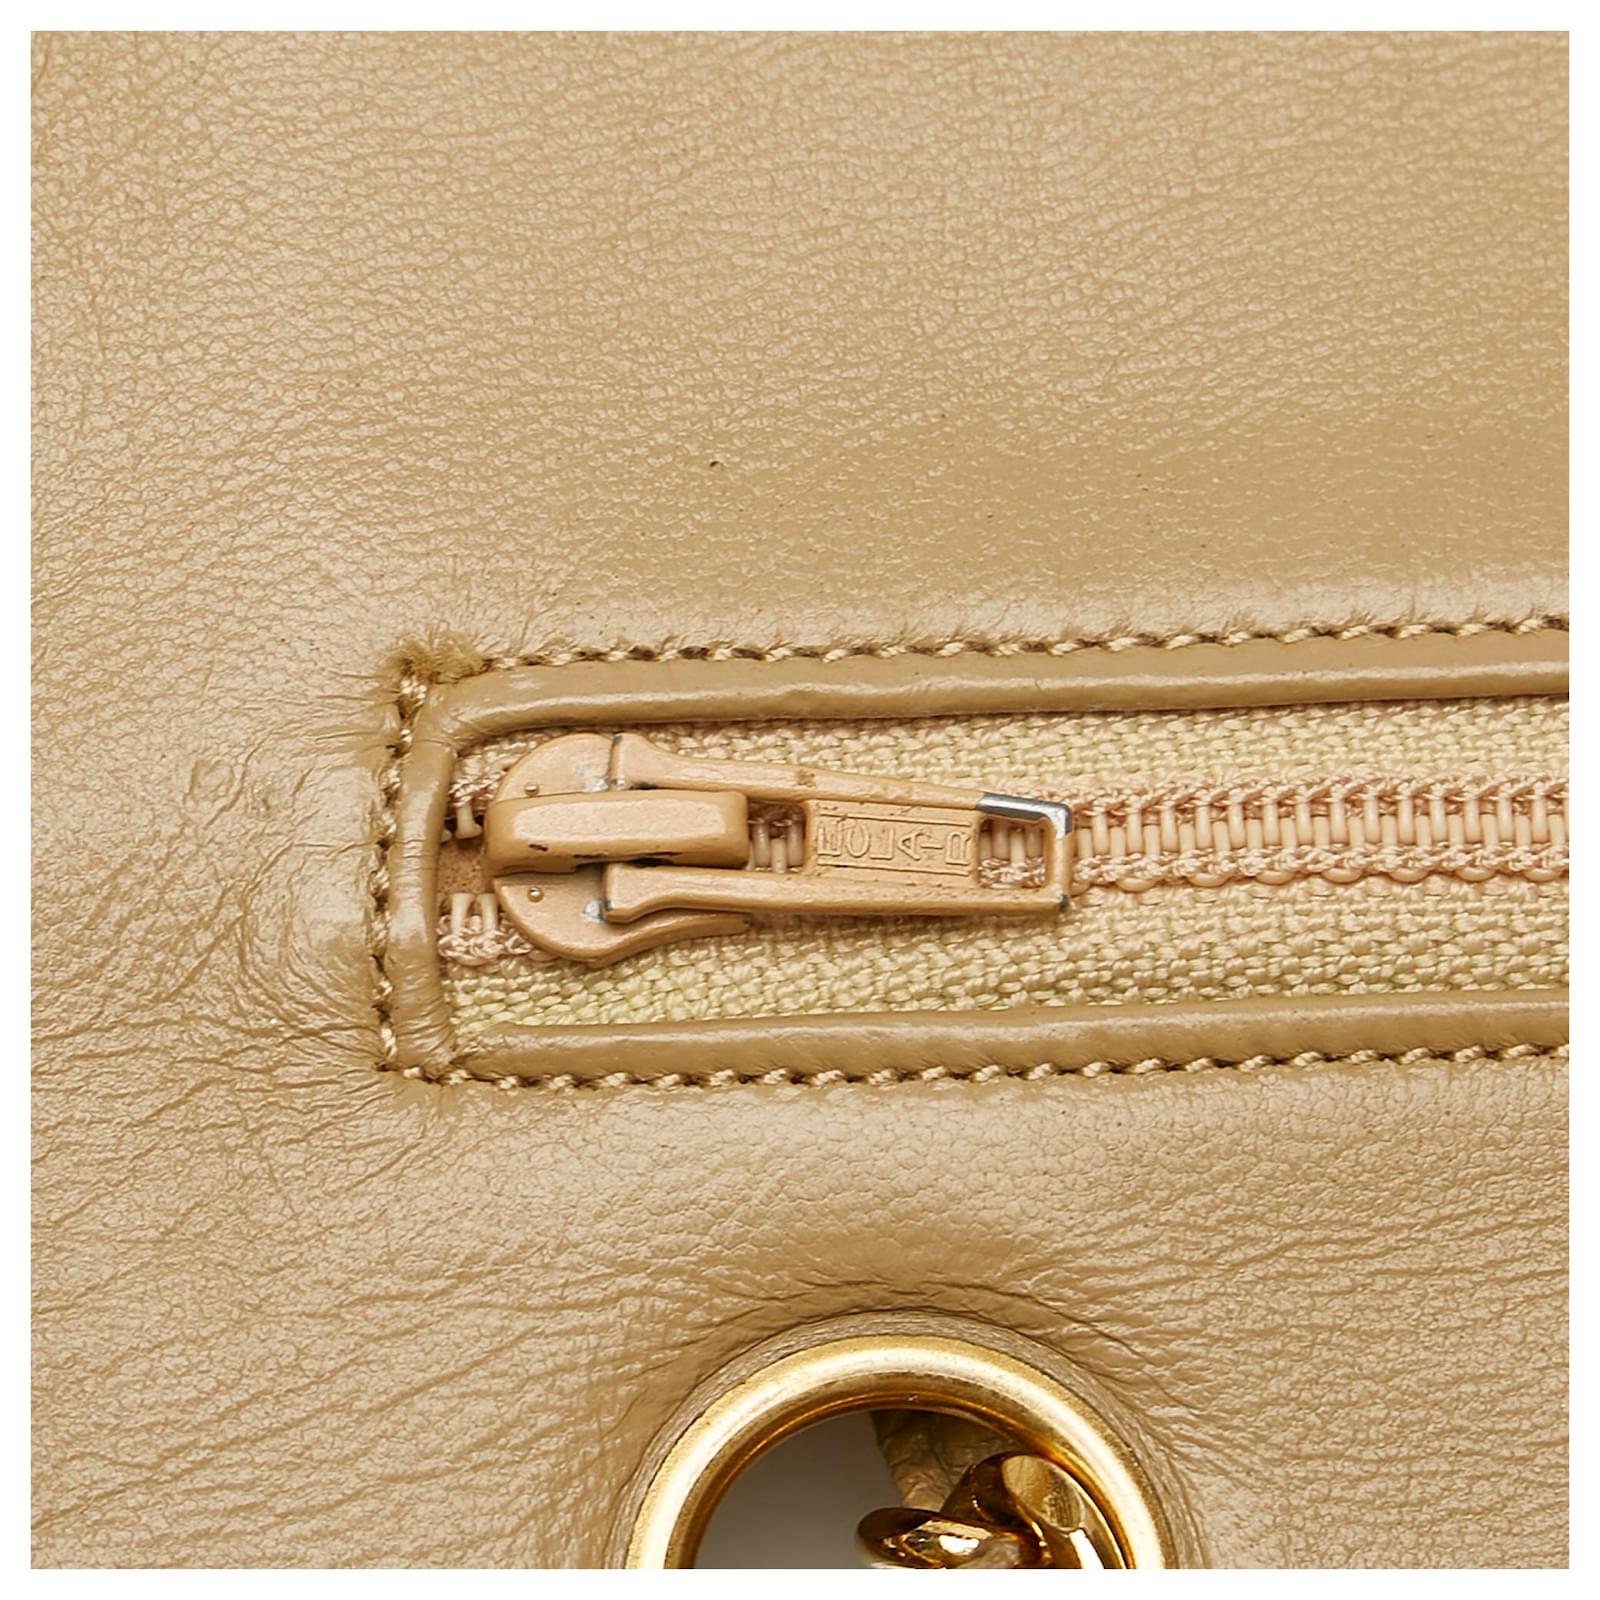 Chanel Classic Medium Double Flap Bag - Brown Shoulder Bags